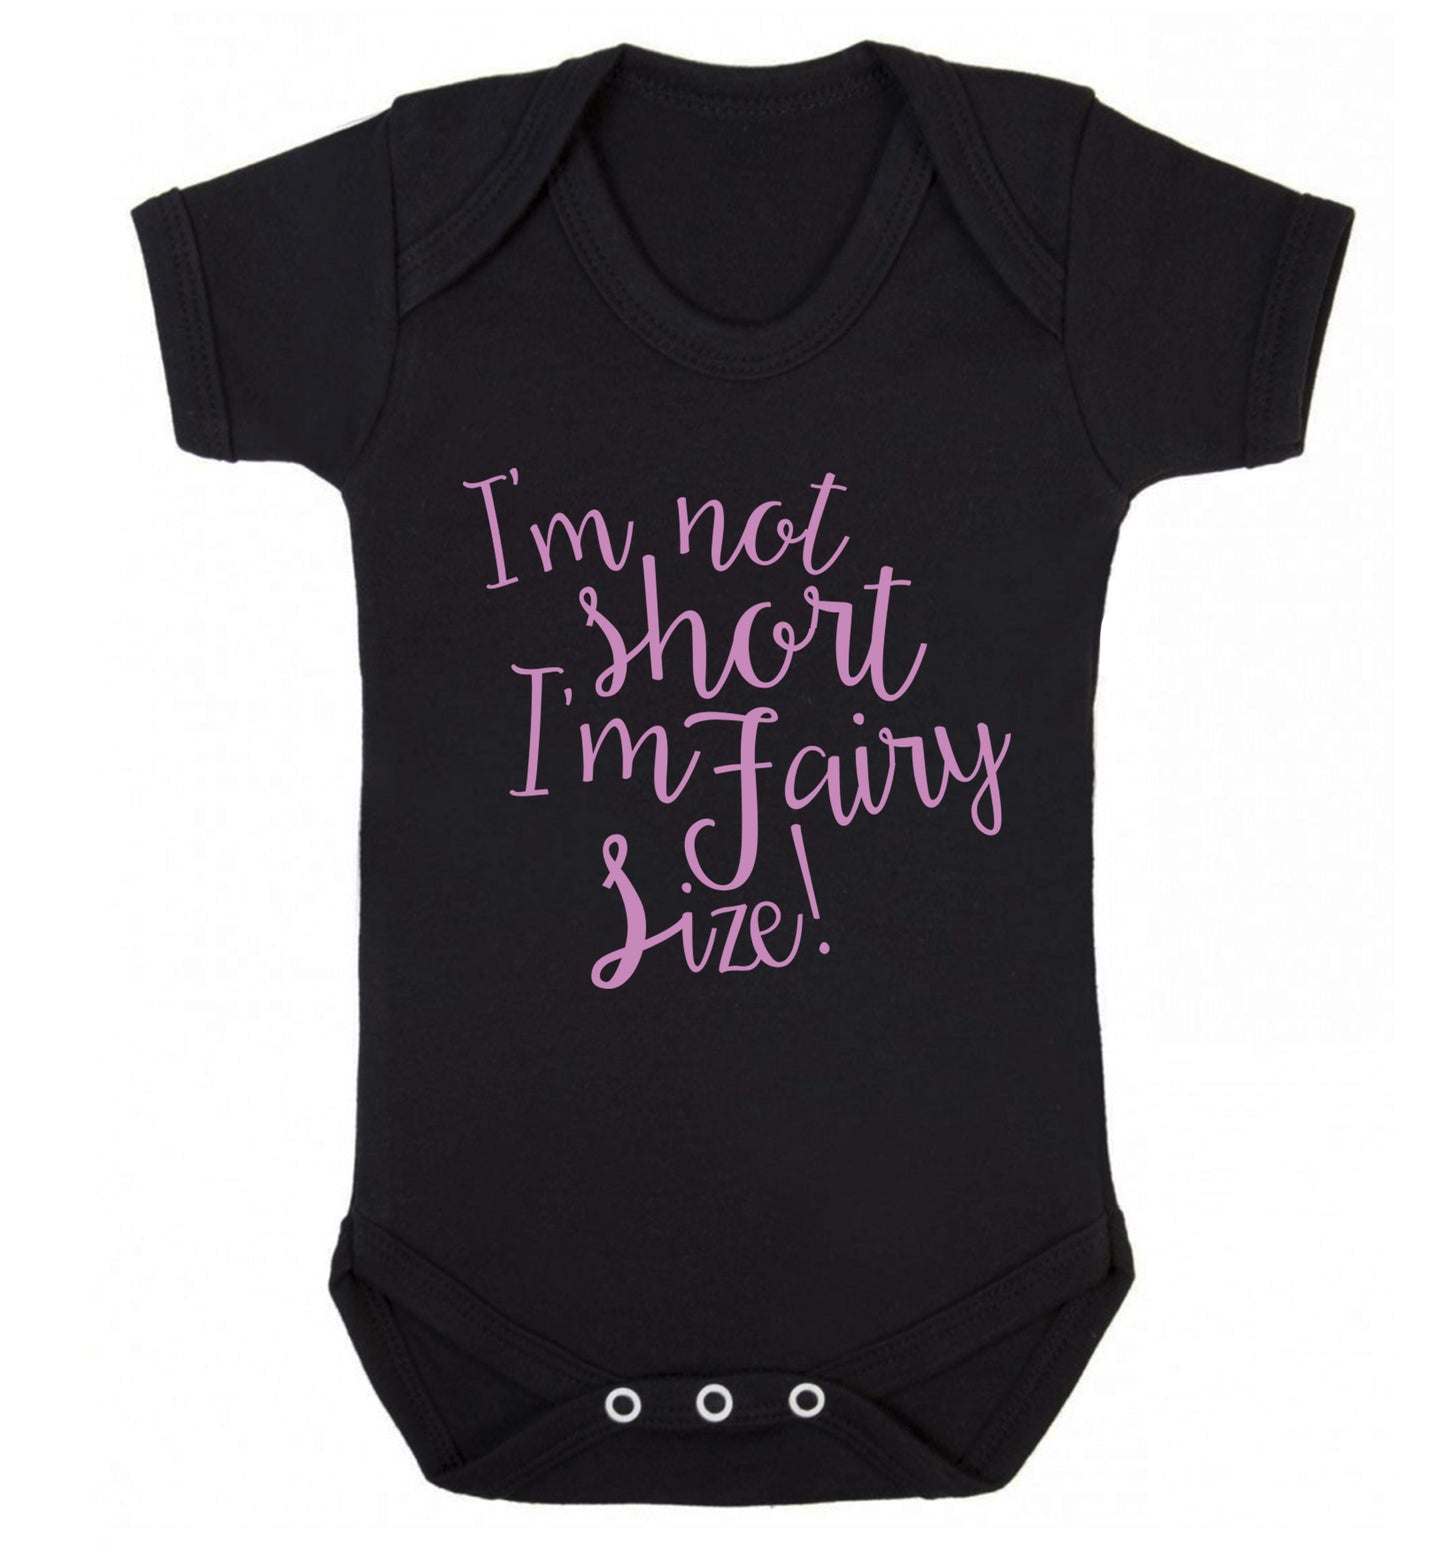 I'm not short I'm fairy sized! Baby Vest black 18-24 months